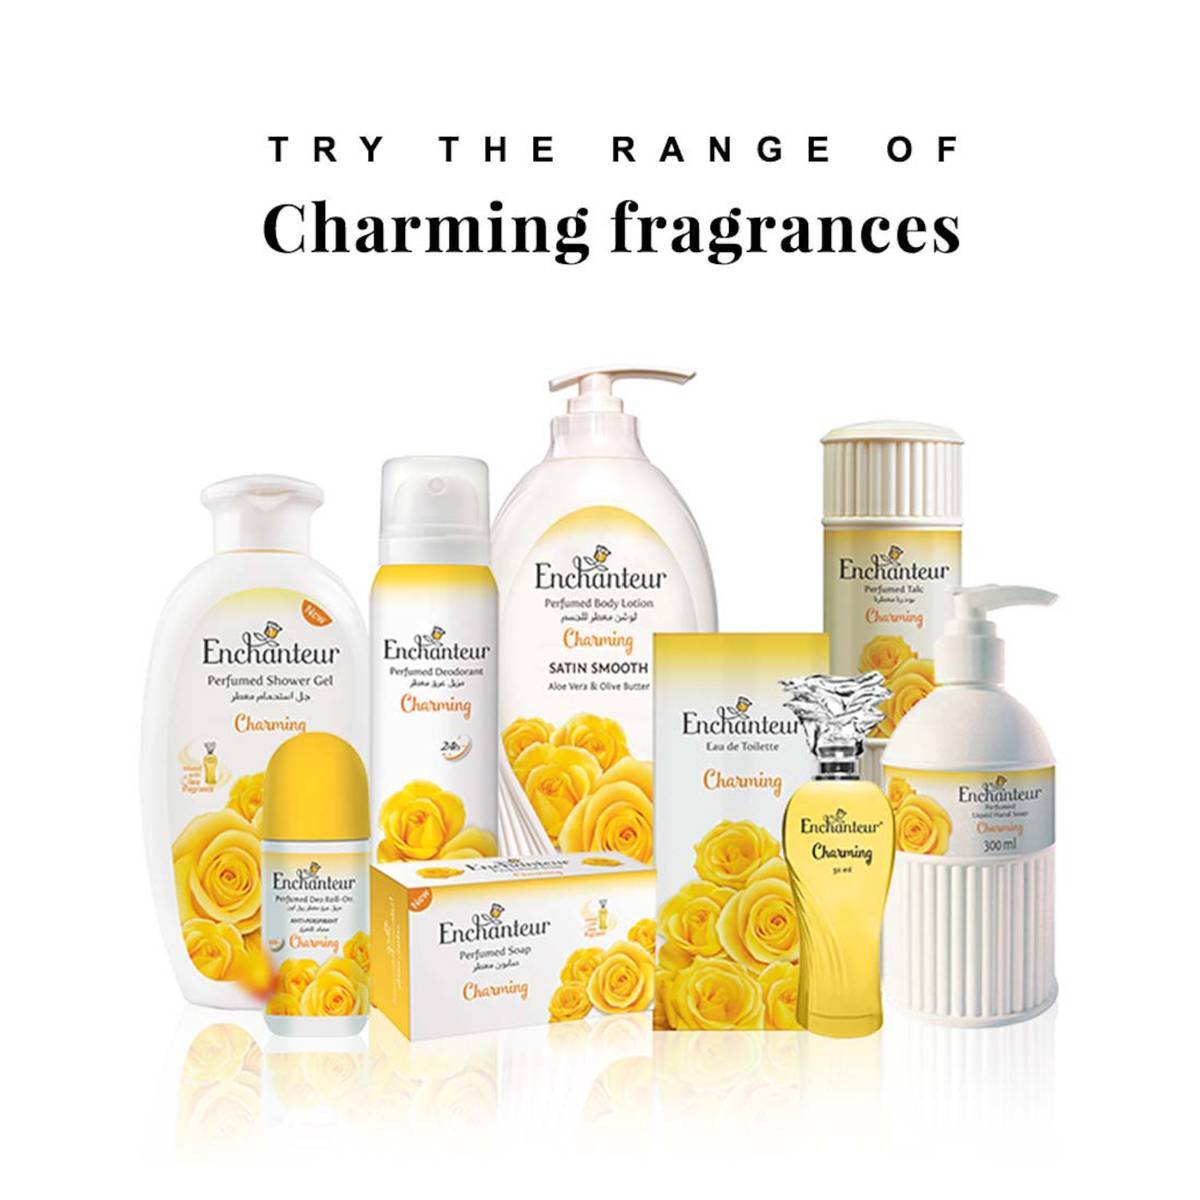 Enchanteur Charming EDT Perfume for Women 100 ml